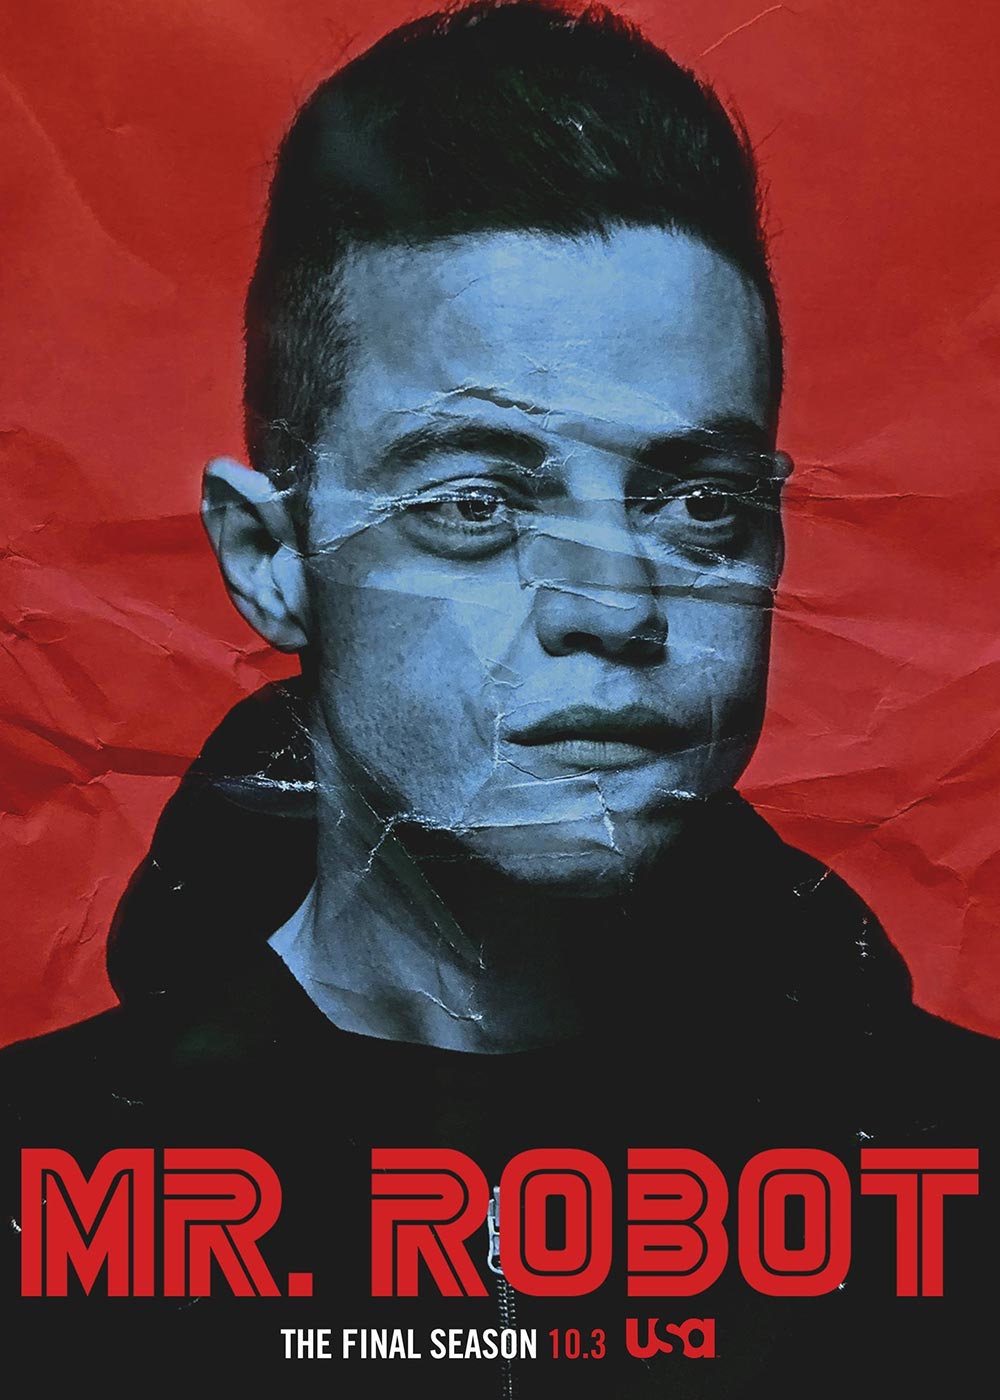 Comida sana Torpe Orden alfabetico Mr. Robot Season 4 TV Series (2019) | Release Date, Review, Cast, Trailer,  Watch Online at Amazon Prime Video - Gadgets 360